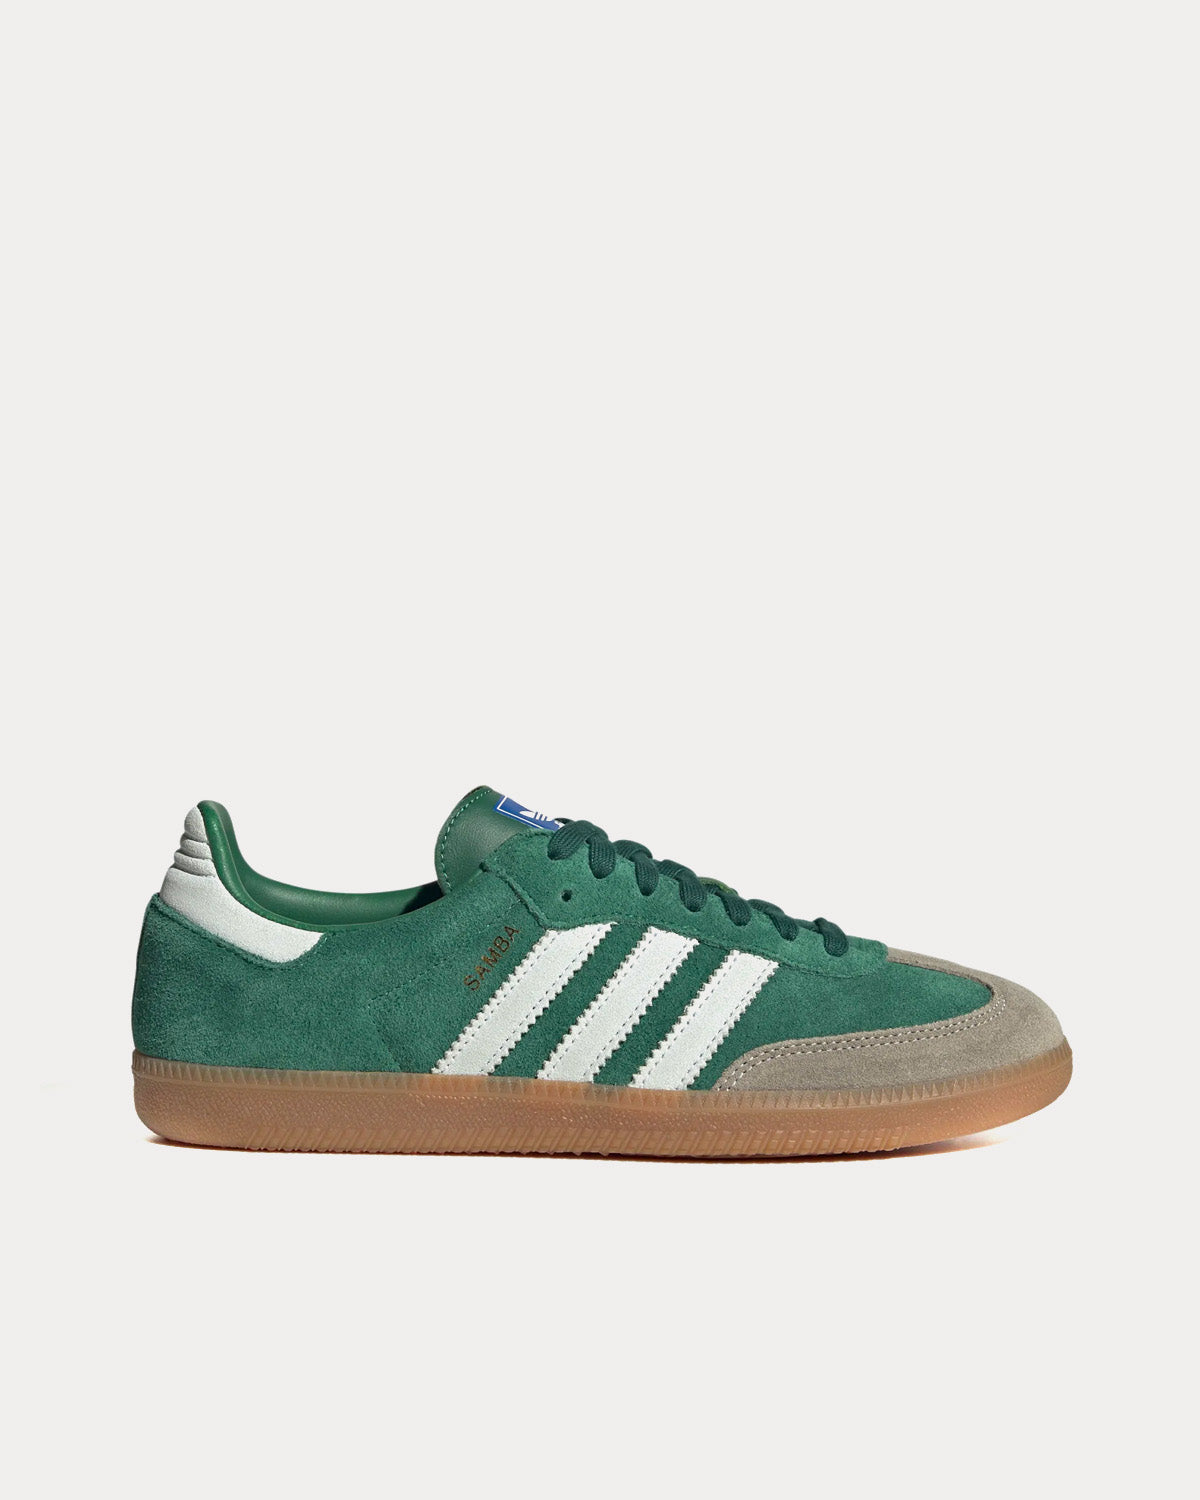 periode Rijden tofu Adidas Samba Collegiate Green / Cloud White / Gum Low Top Sneakers - Sneak  in Peace